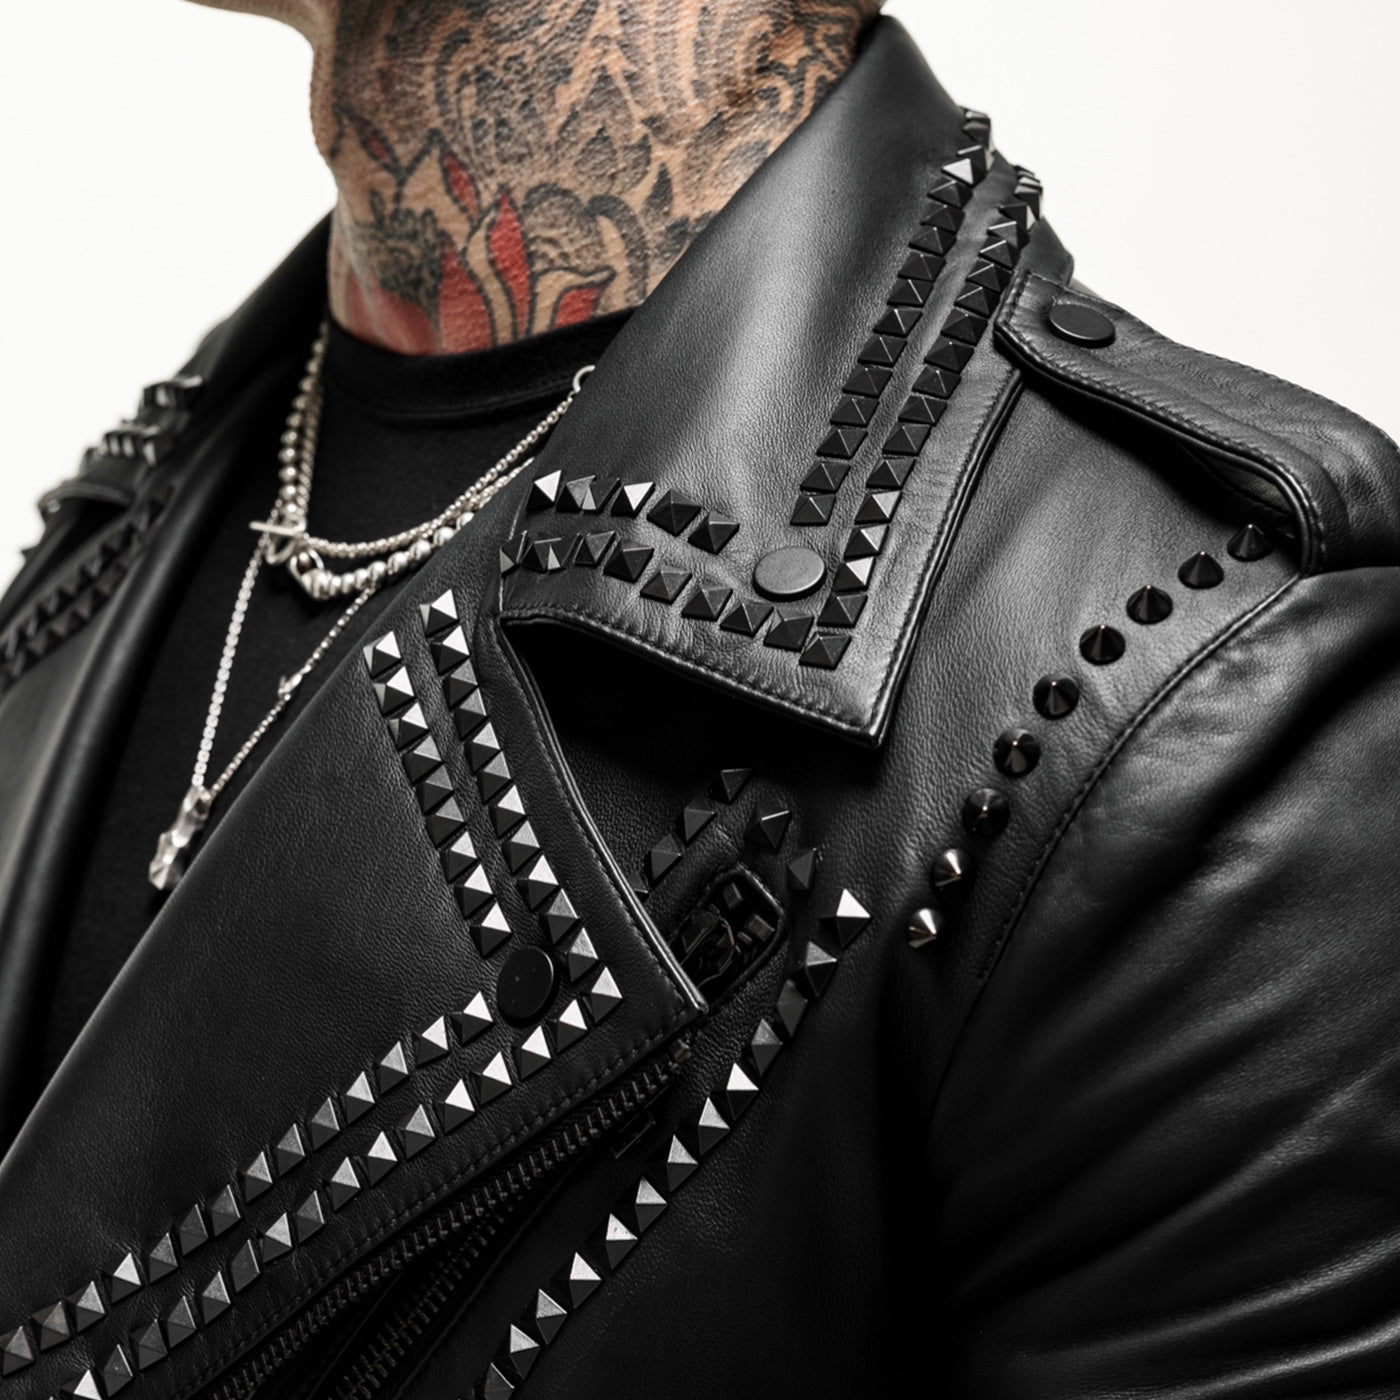 Printed F*ck Evil Studded Leather Jacket